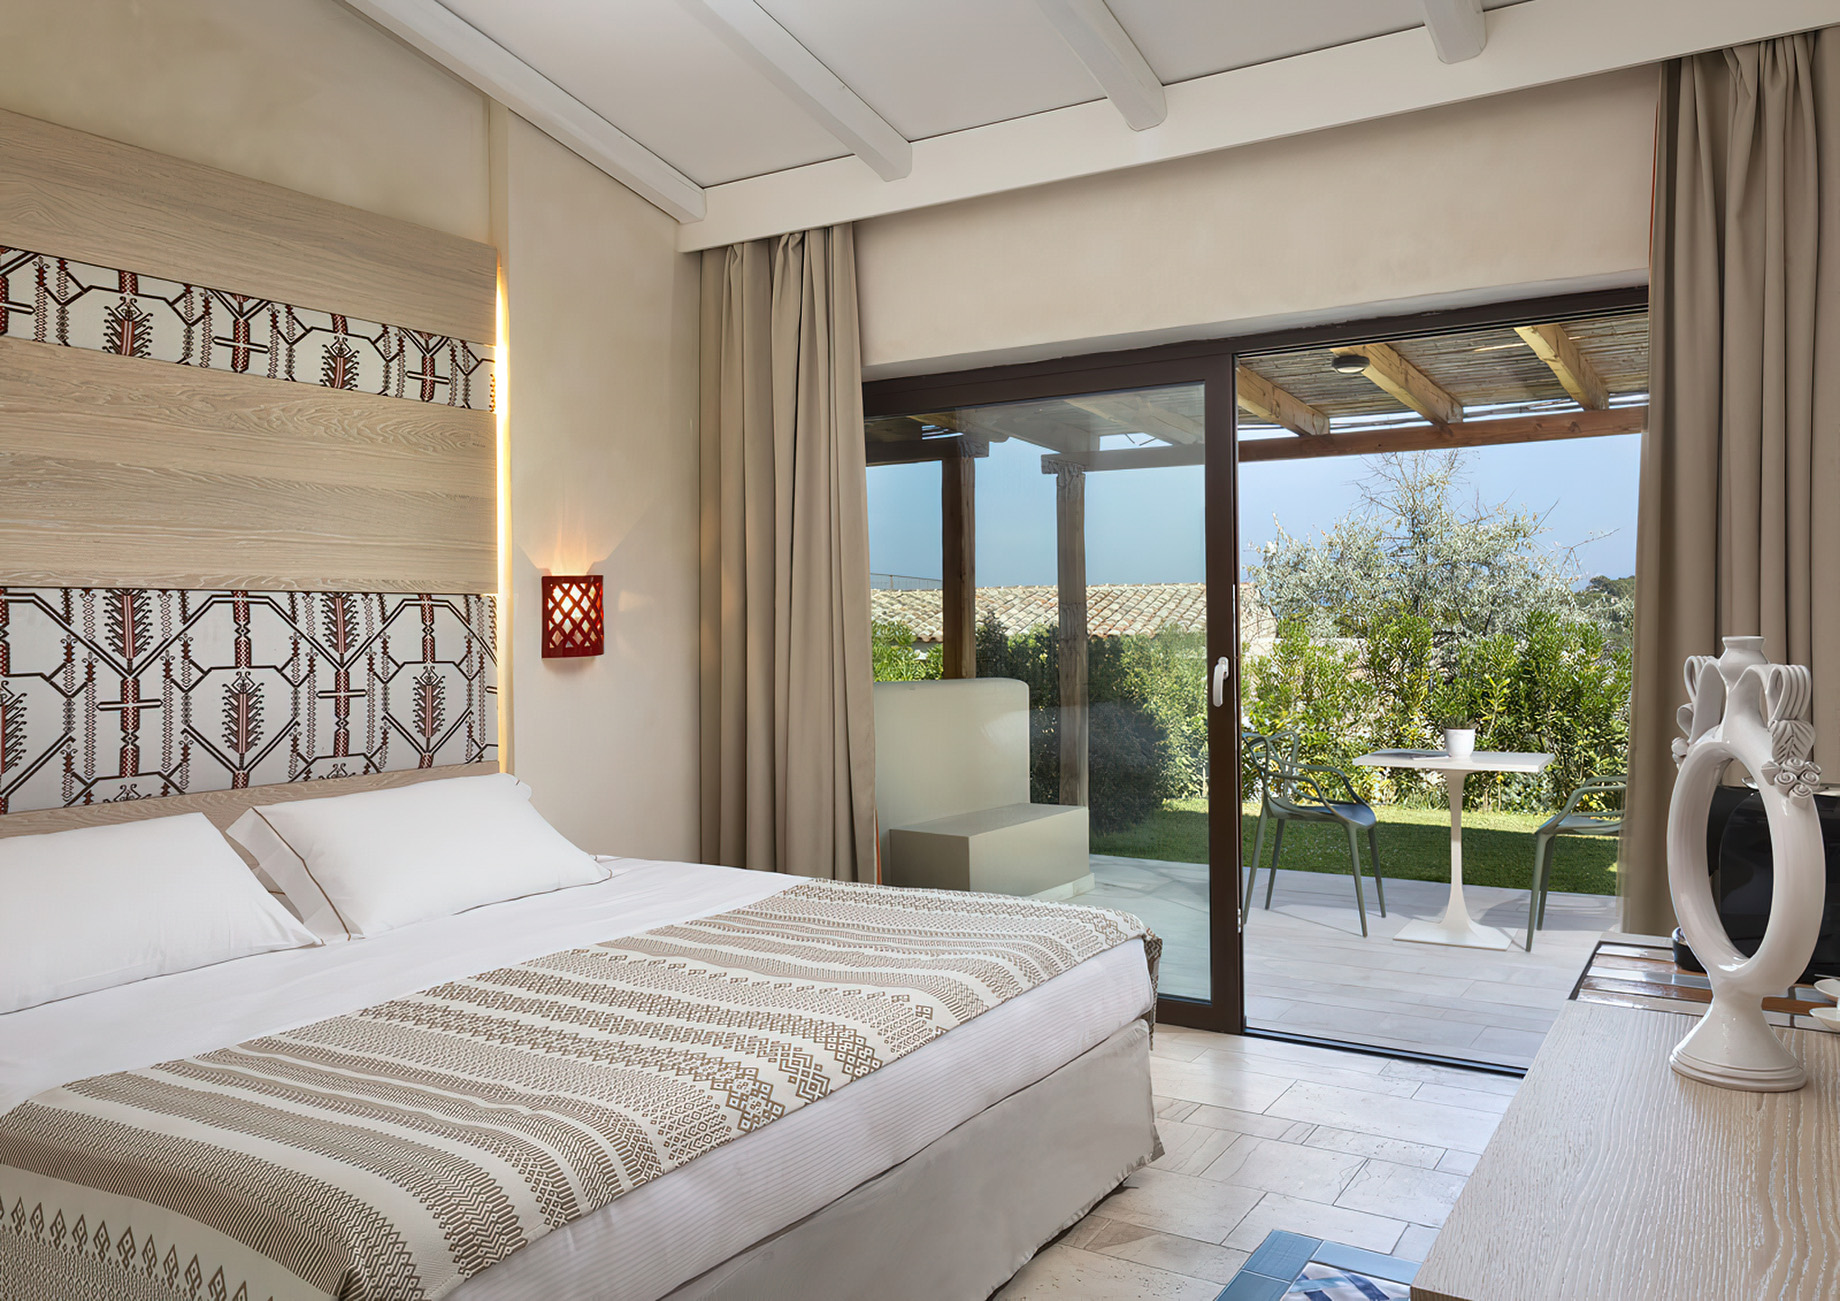 Baglioni Resort Sardinia – San Teodoro, Sardegna, Italy – Superior Room